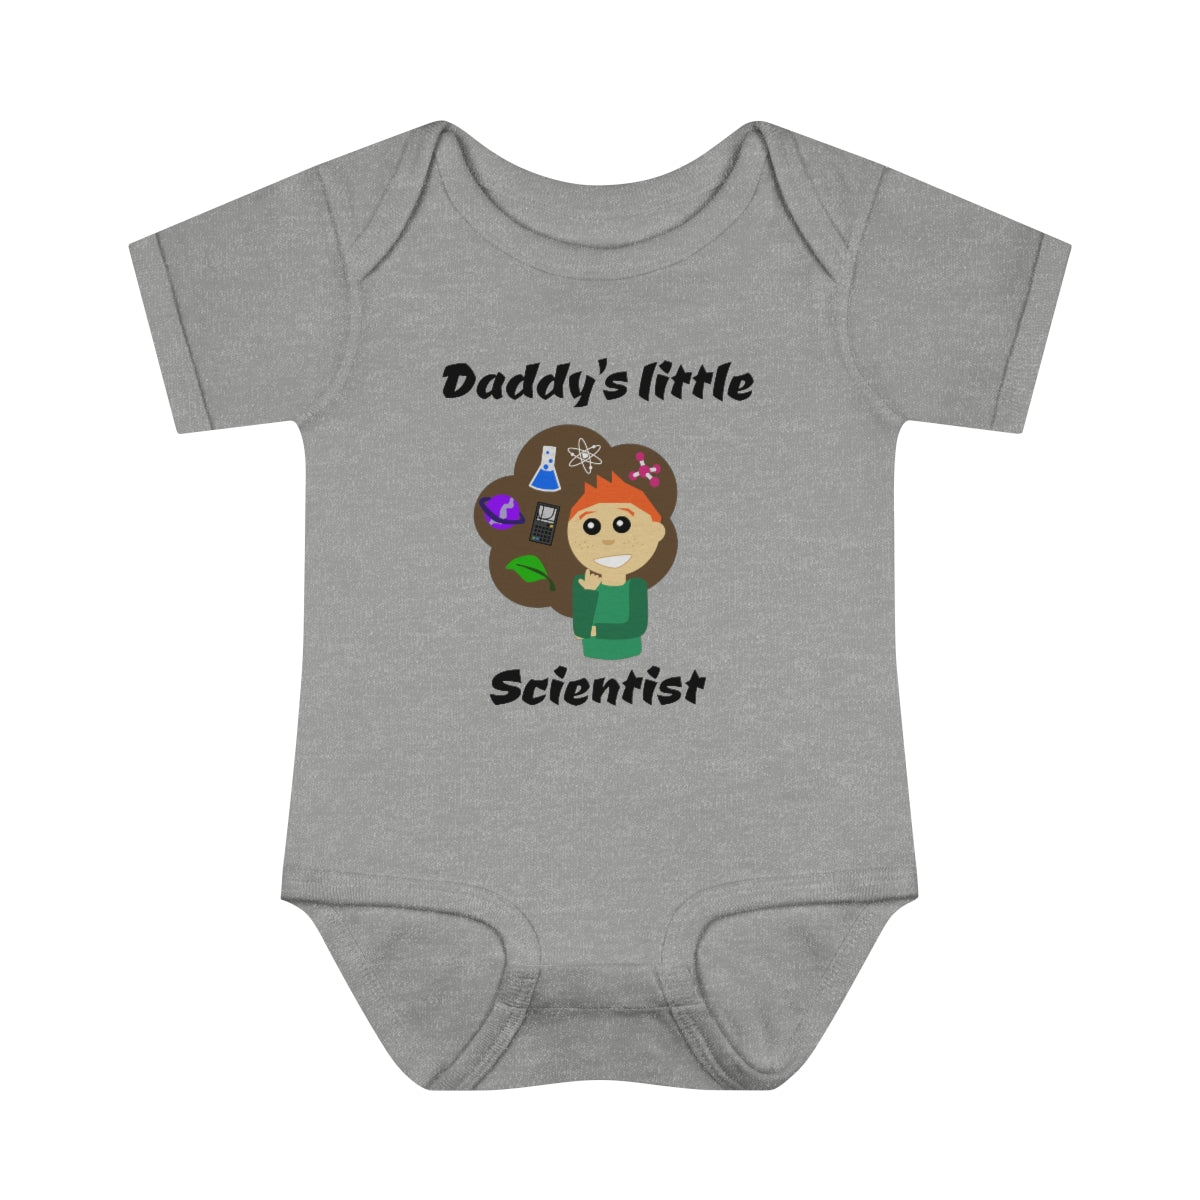 Daddy's little scientist - Infant Baby Rib Bodysuit - CrazyTomTShirts